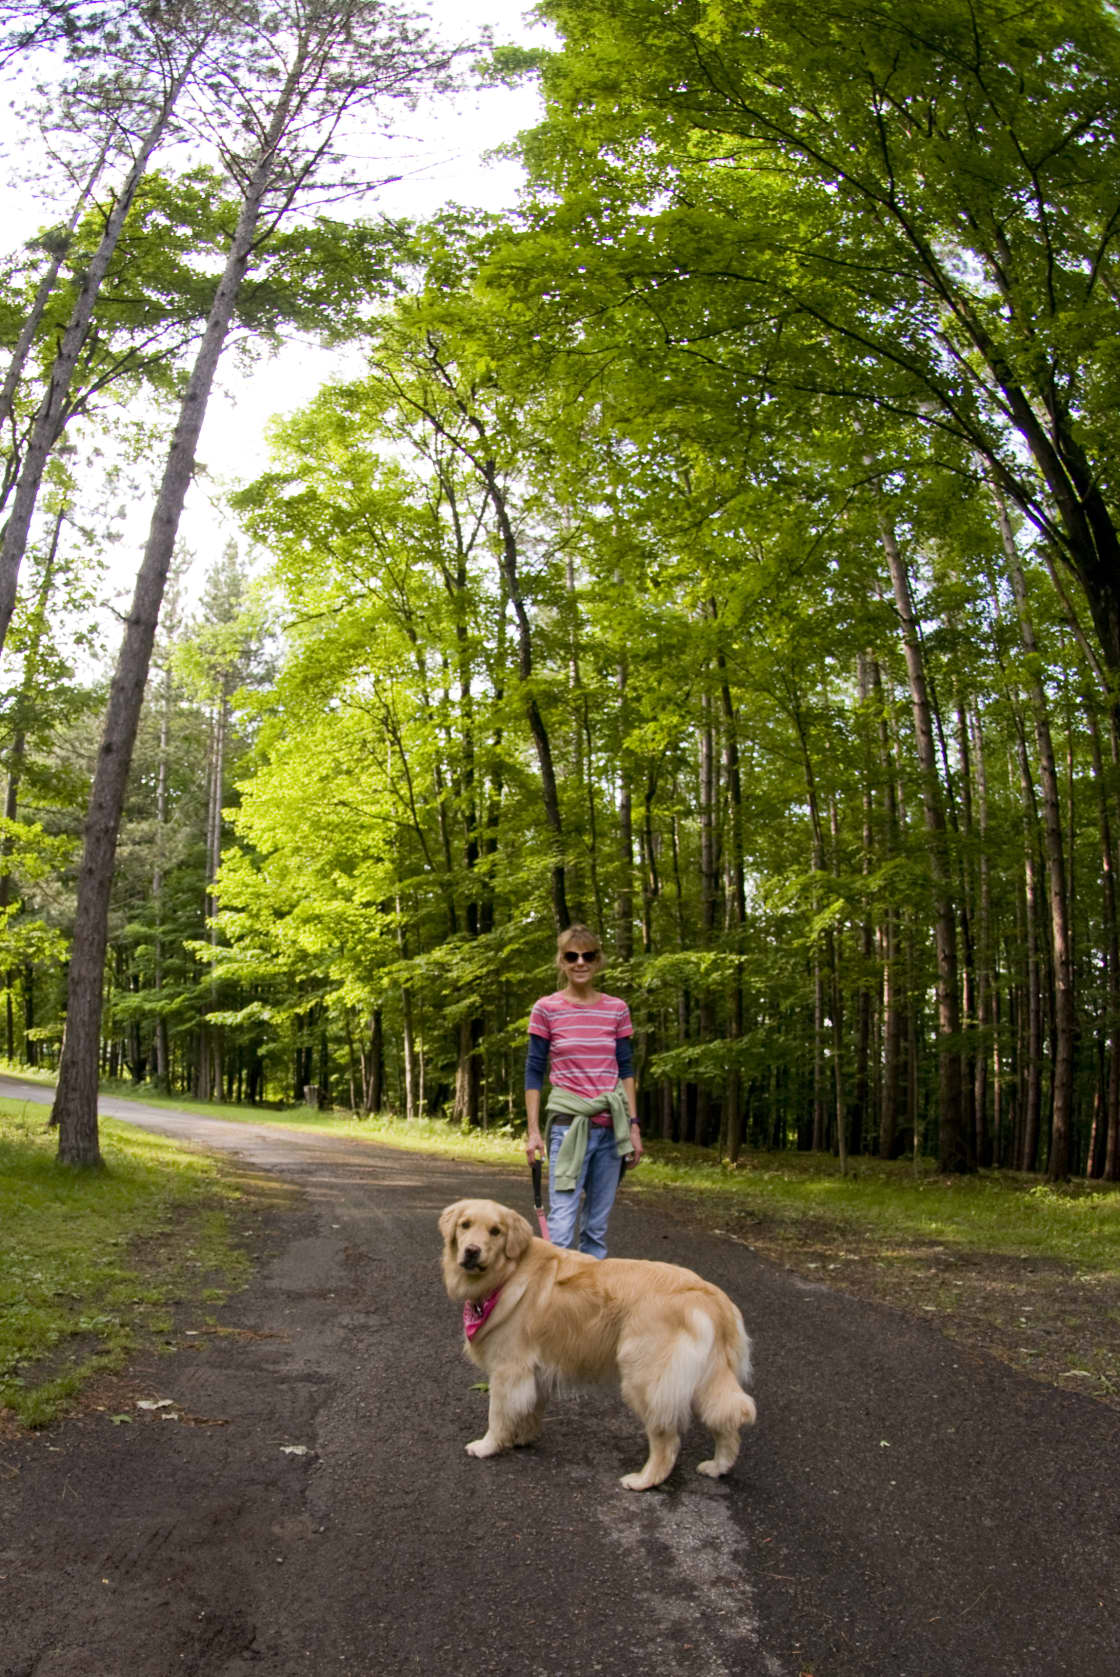 Dog friendly with plenty of trails!